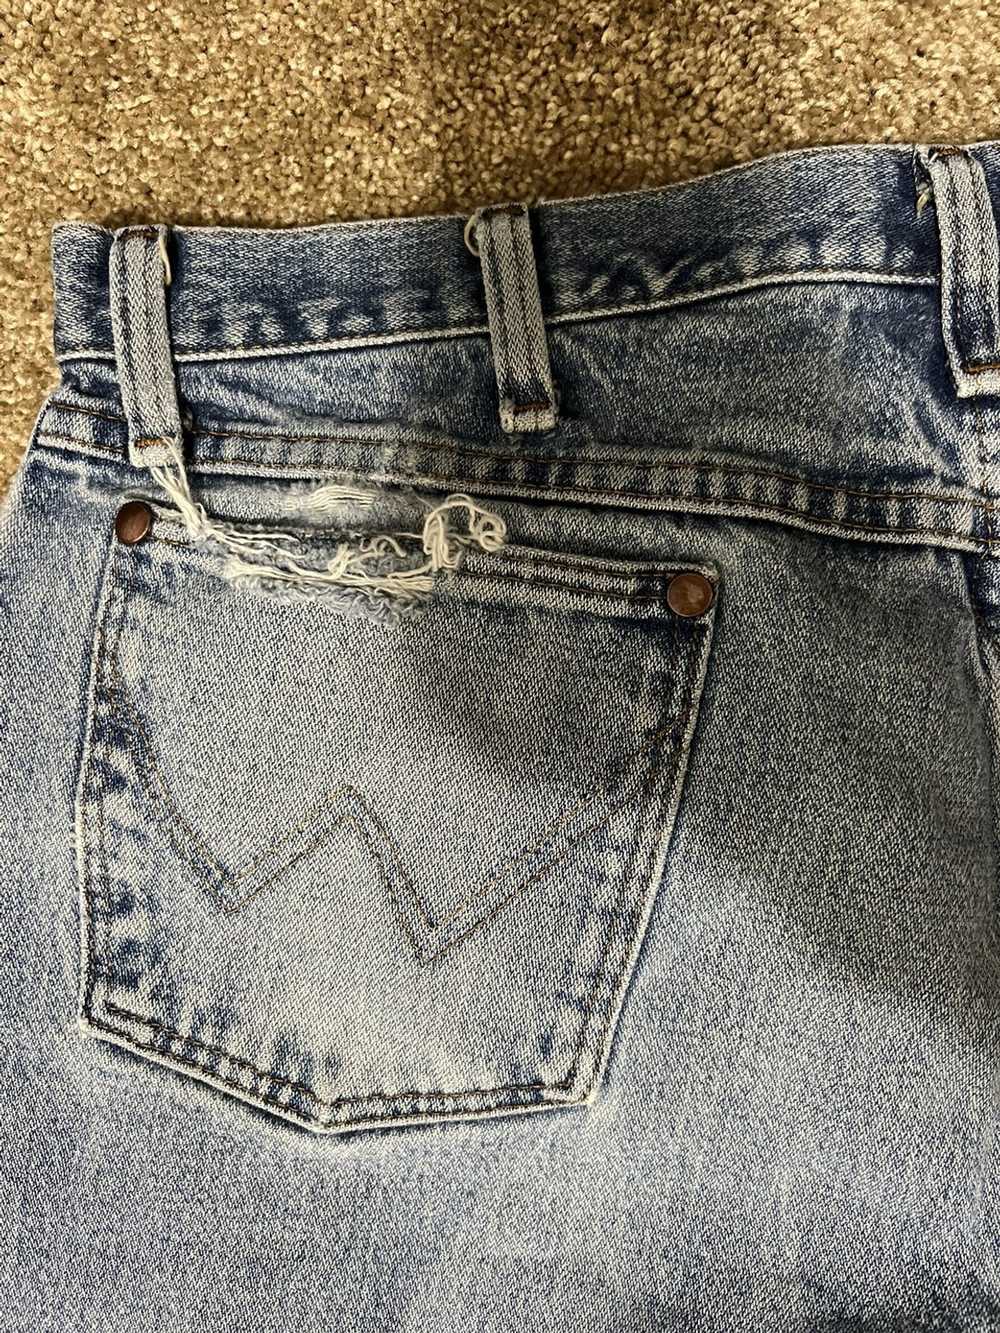 Wrangler Wrangler vintage jeans - image 4